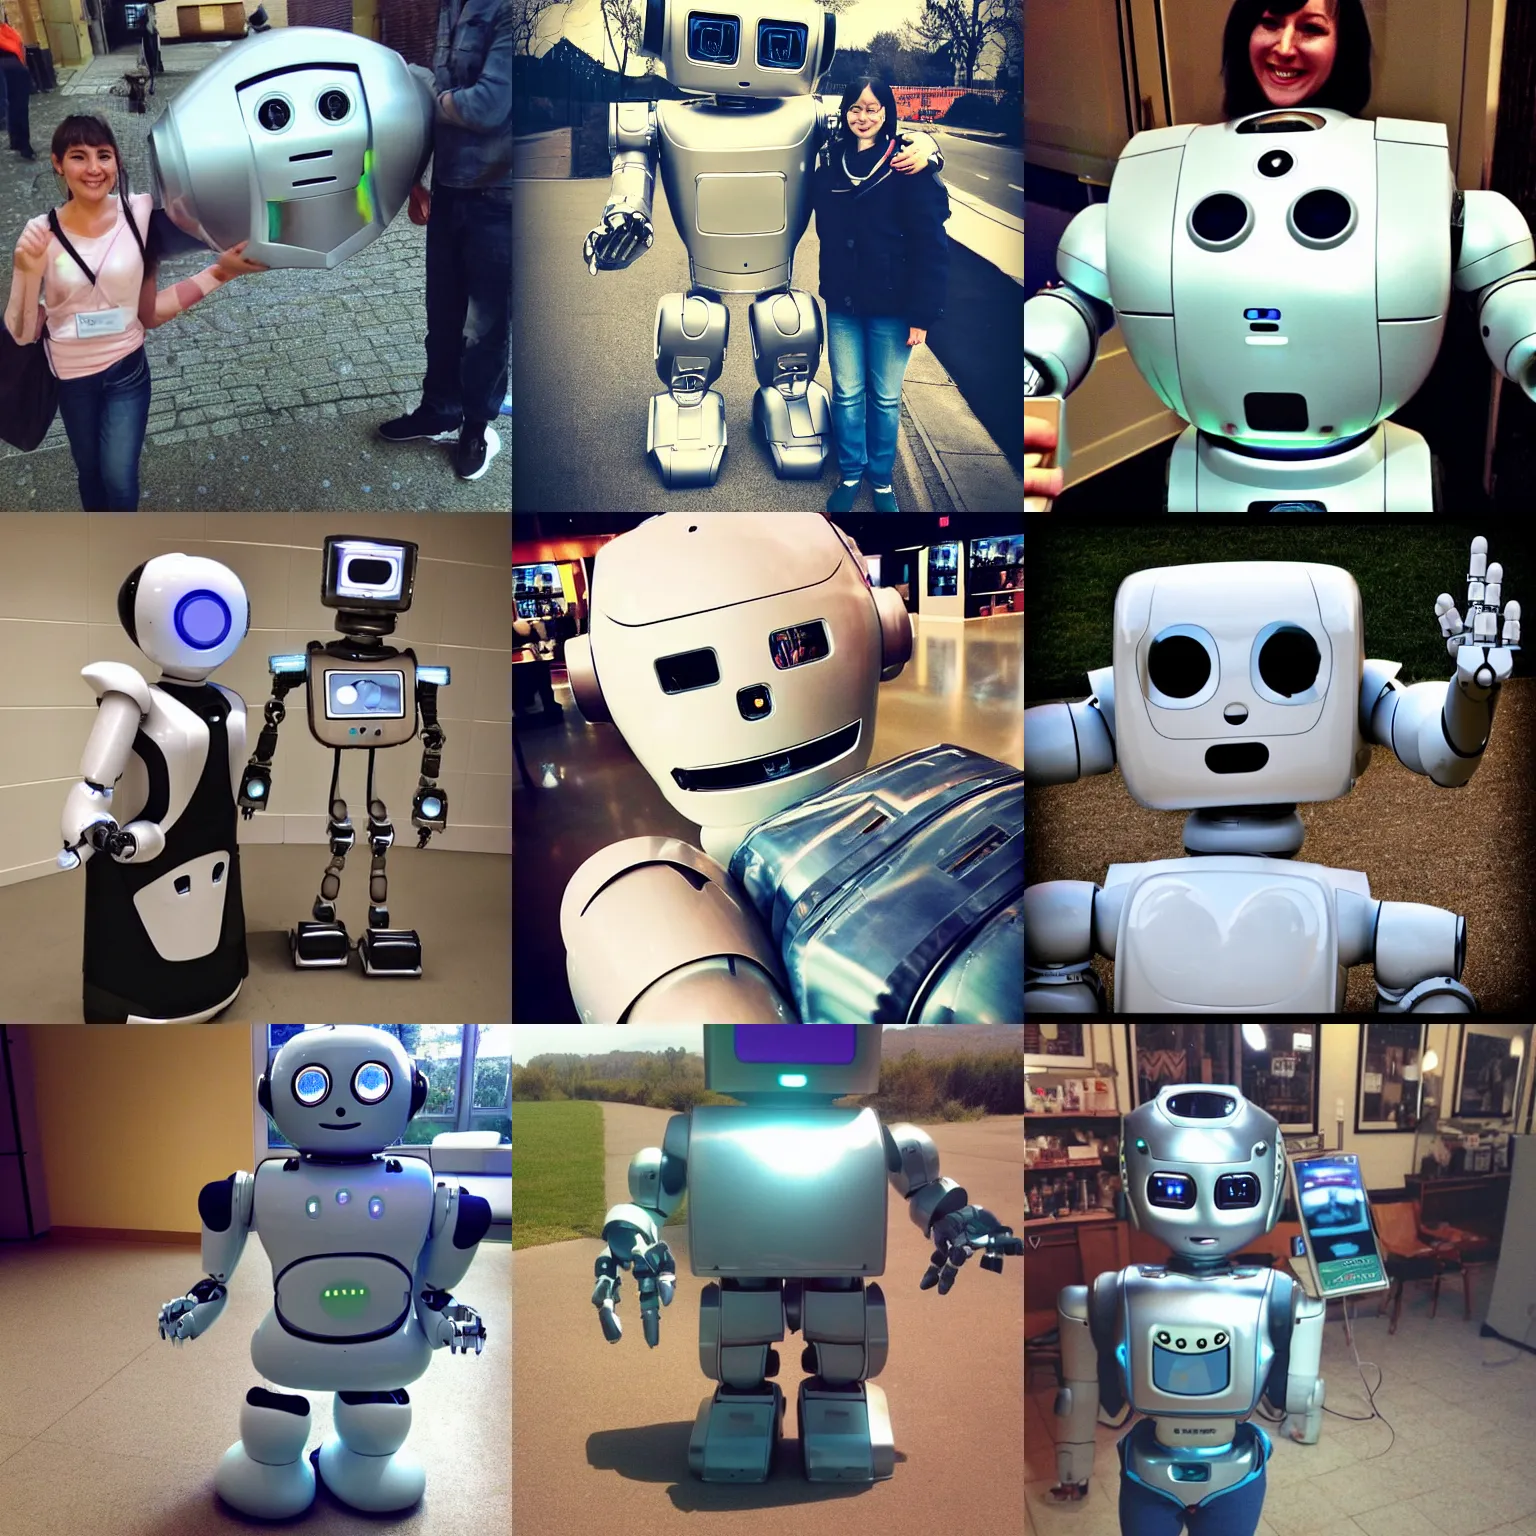 Prompt: <photo hd crisp><robot friendly cute adorable desires='big hug'>selfie with a cool robot i found</robot></photo>